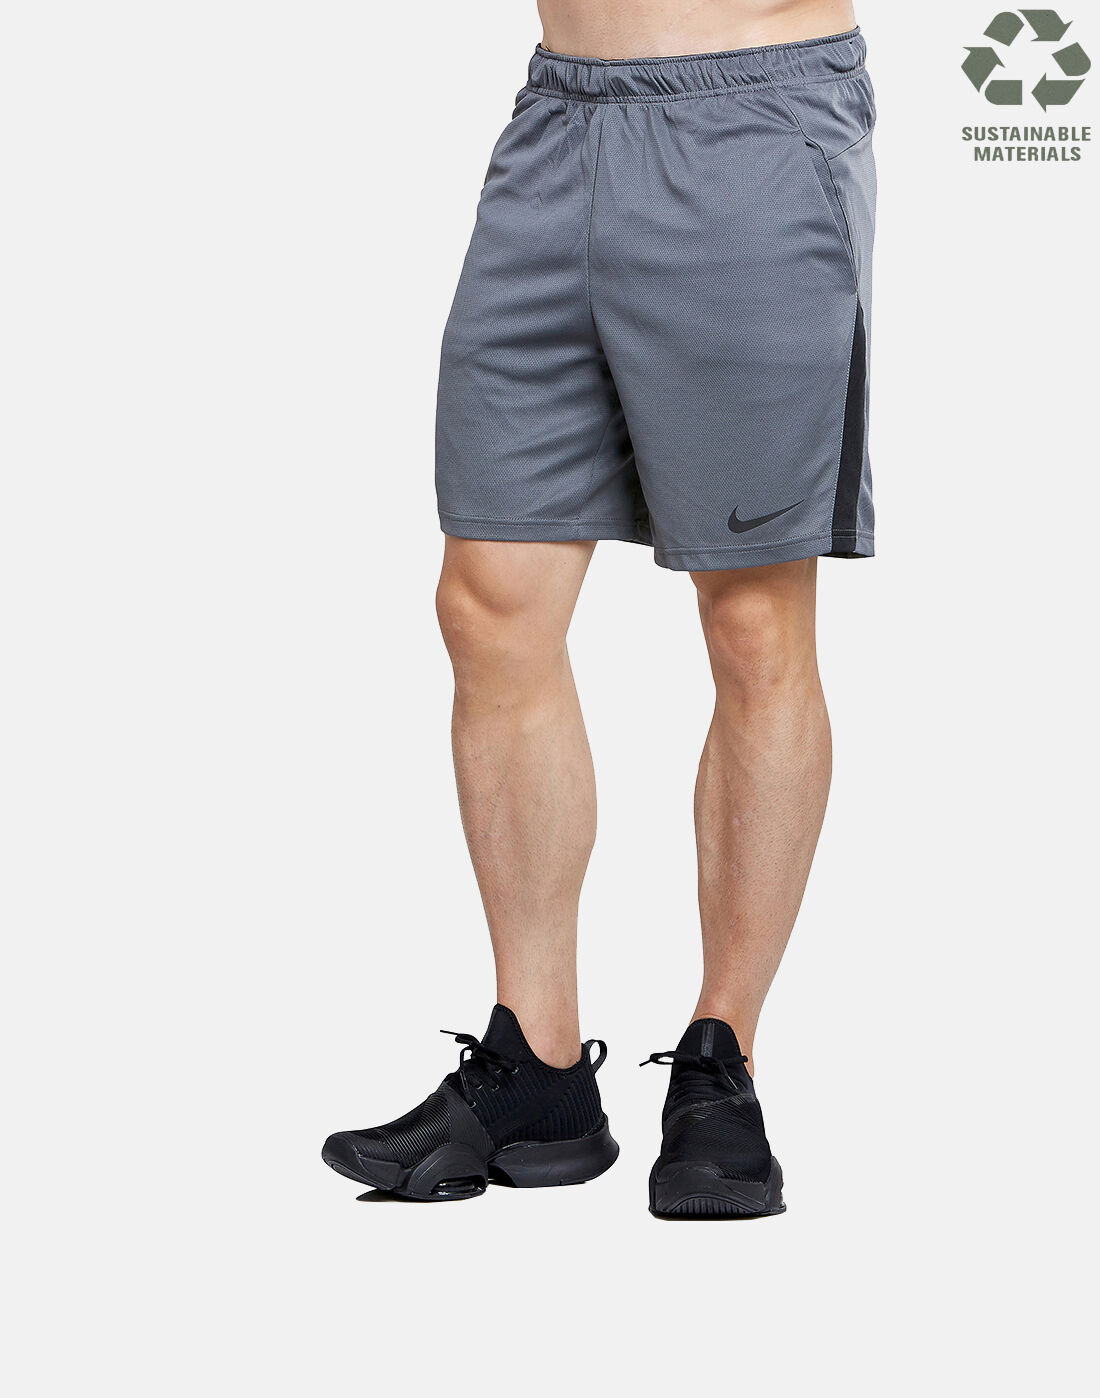 Nike Mens Dry 5.0 Shorts - Grey | Life 